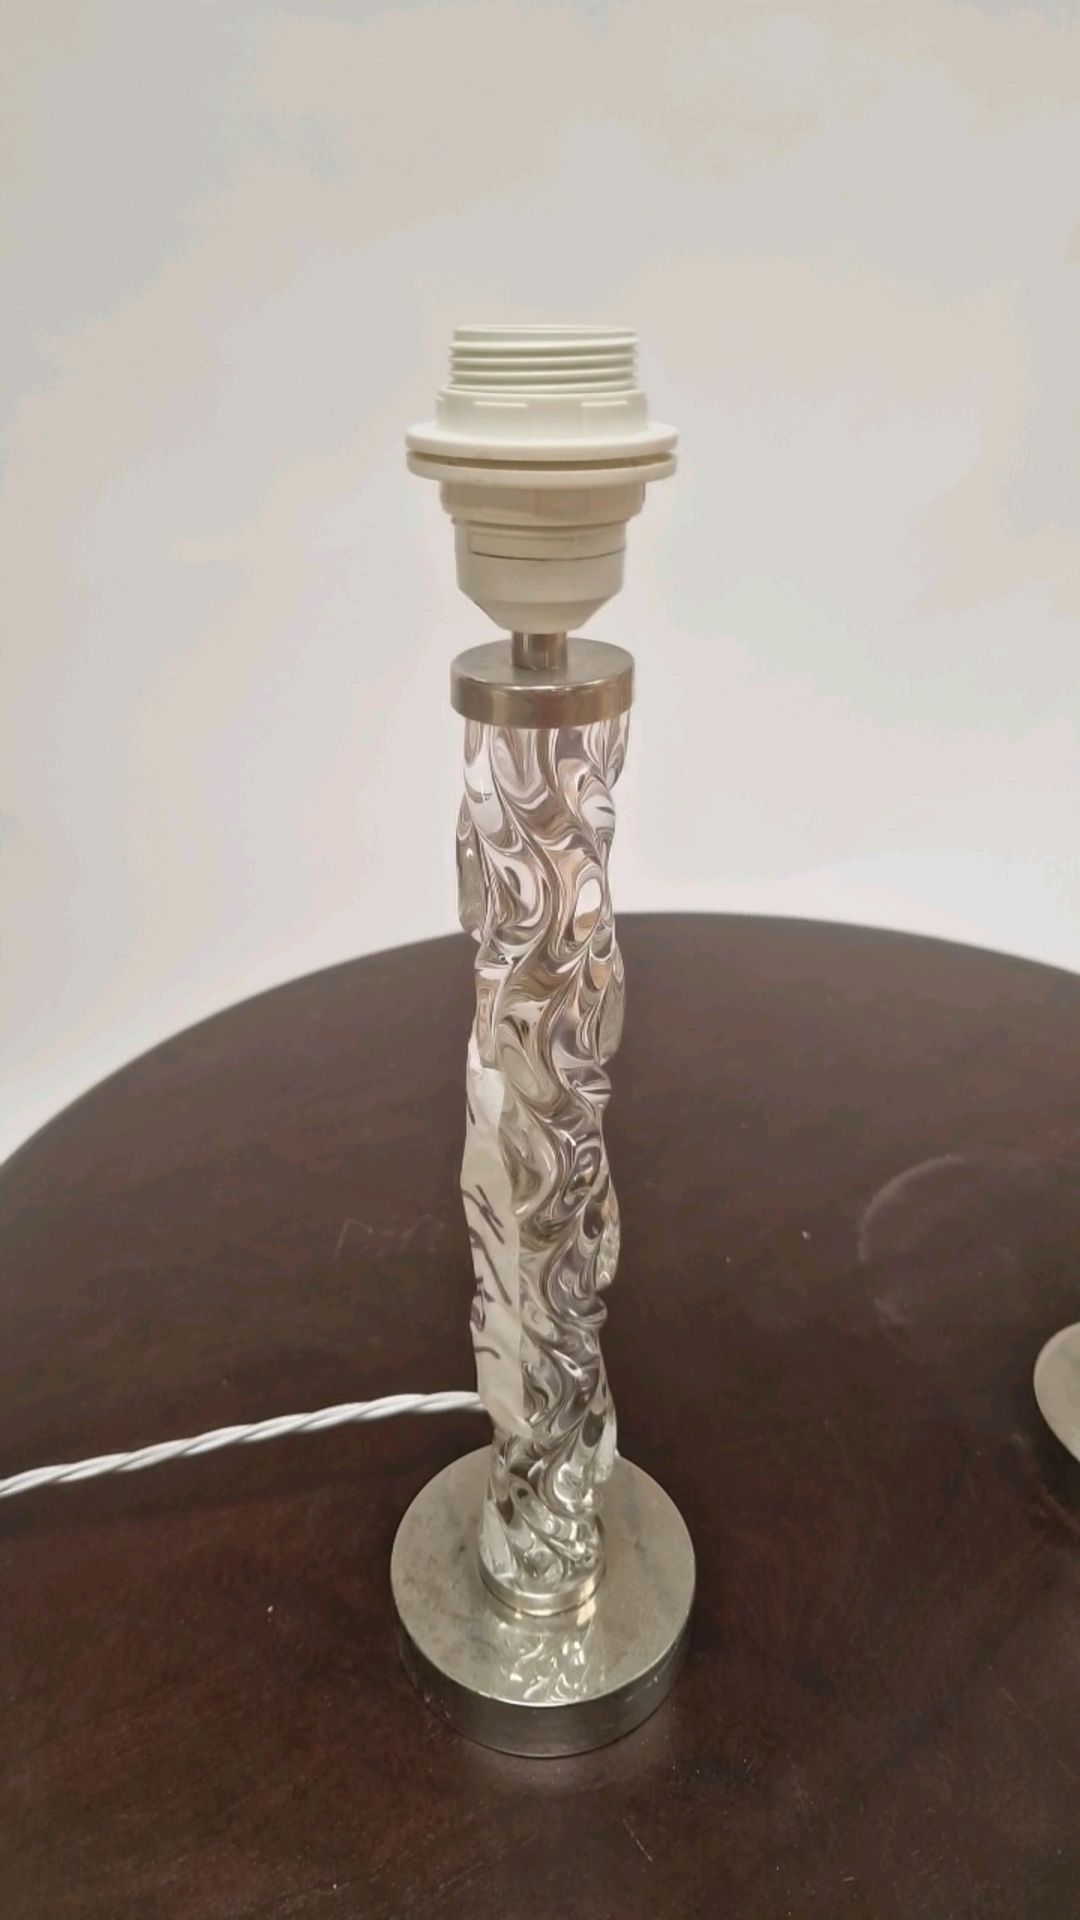 A Pair of Meribel Table Lamps - Image 2 of 4